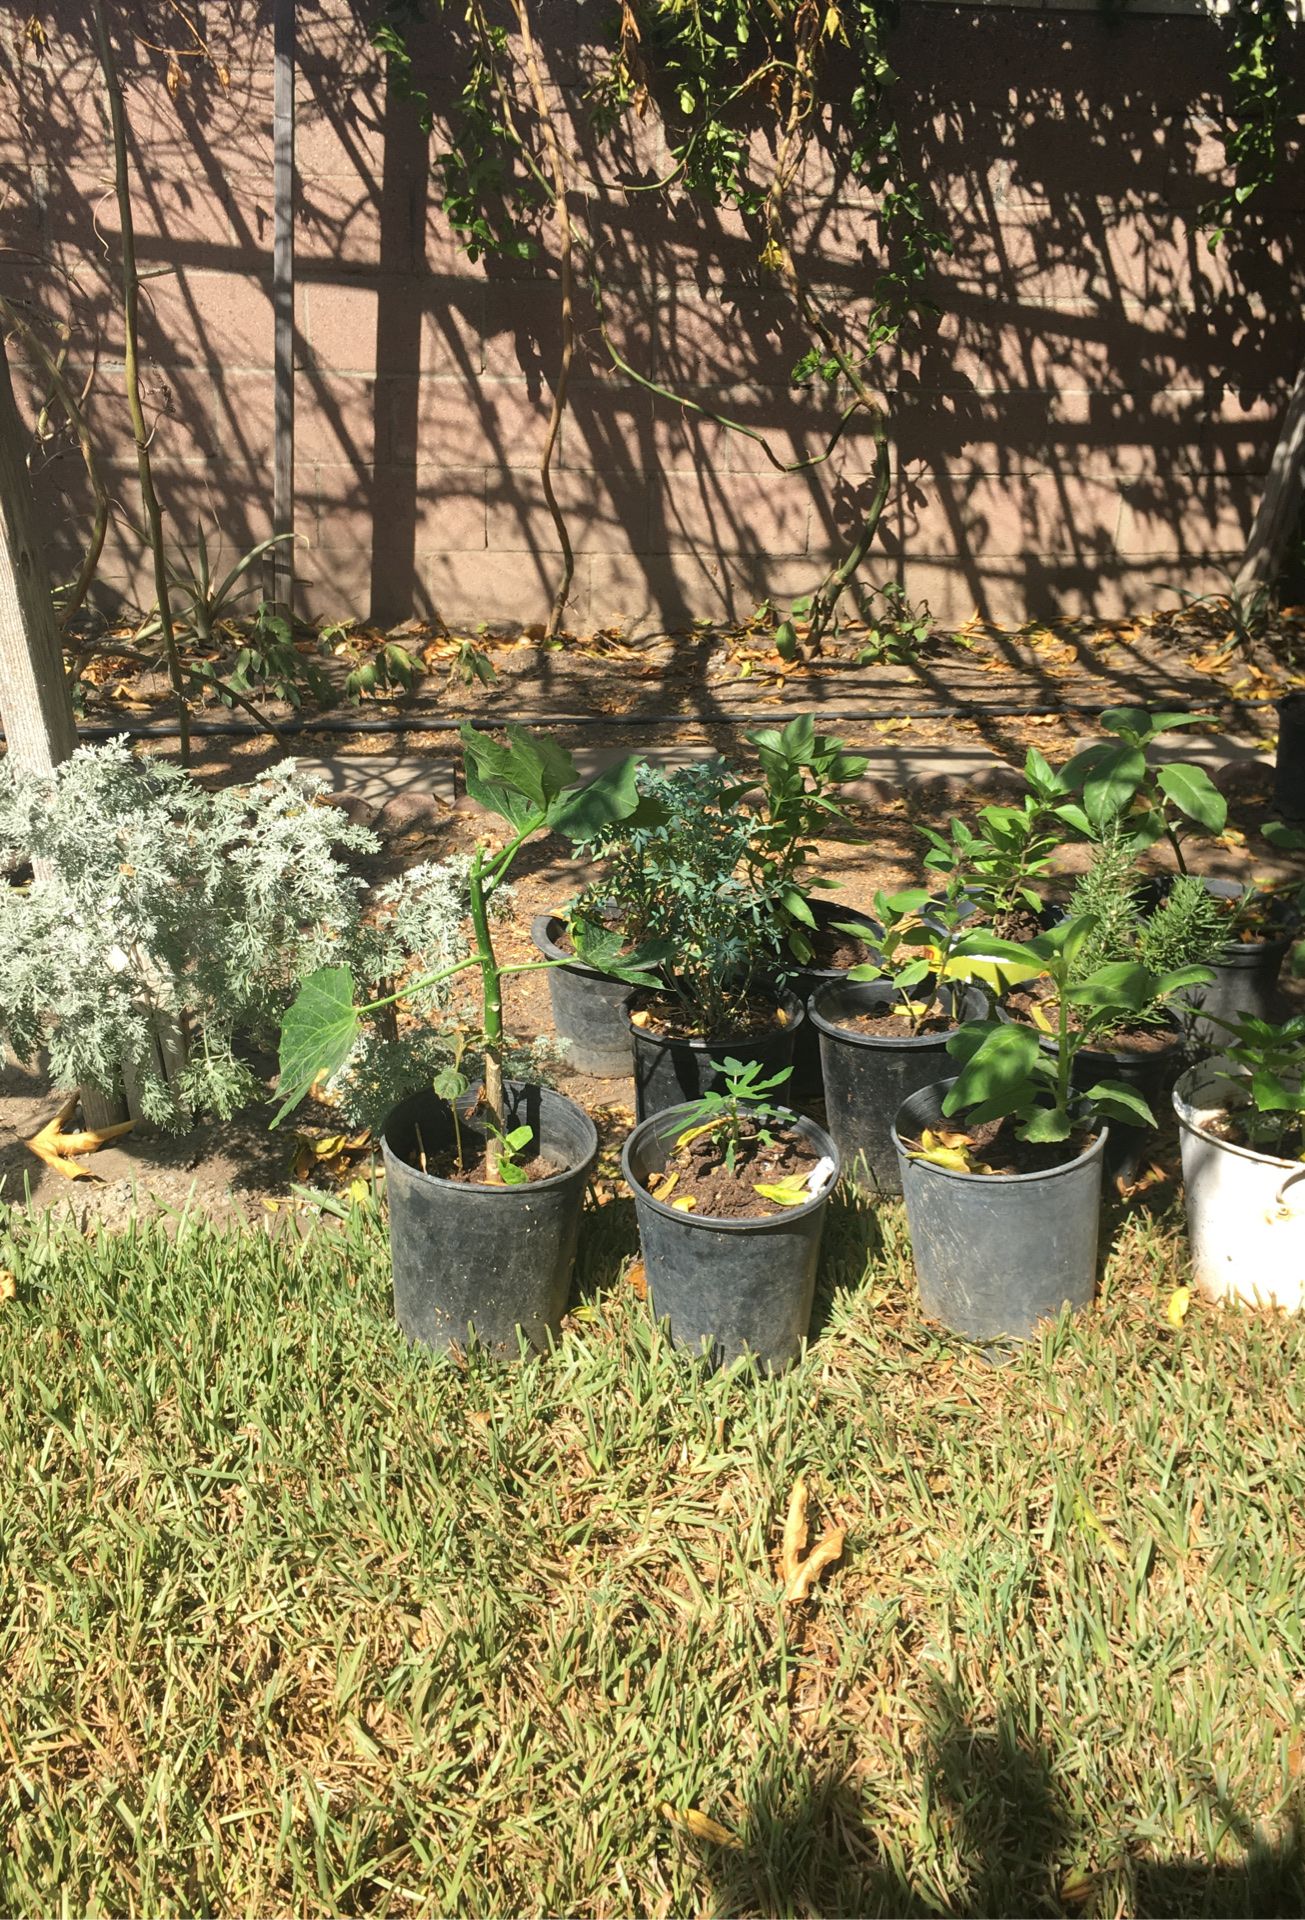 Plant as medicinales . chaya, romero, ruda, achitaba, chipilin, maracuya